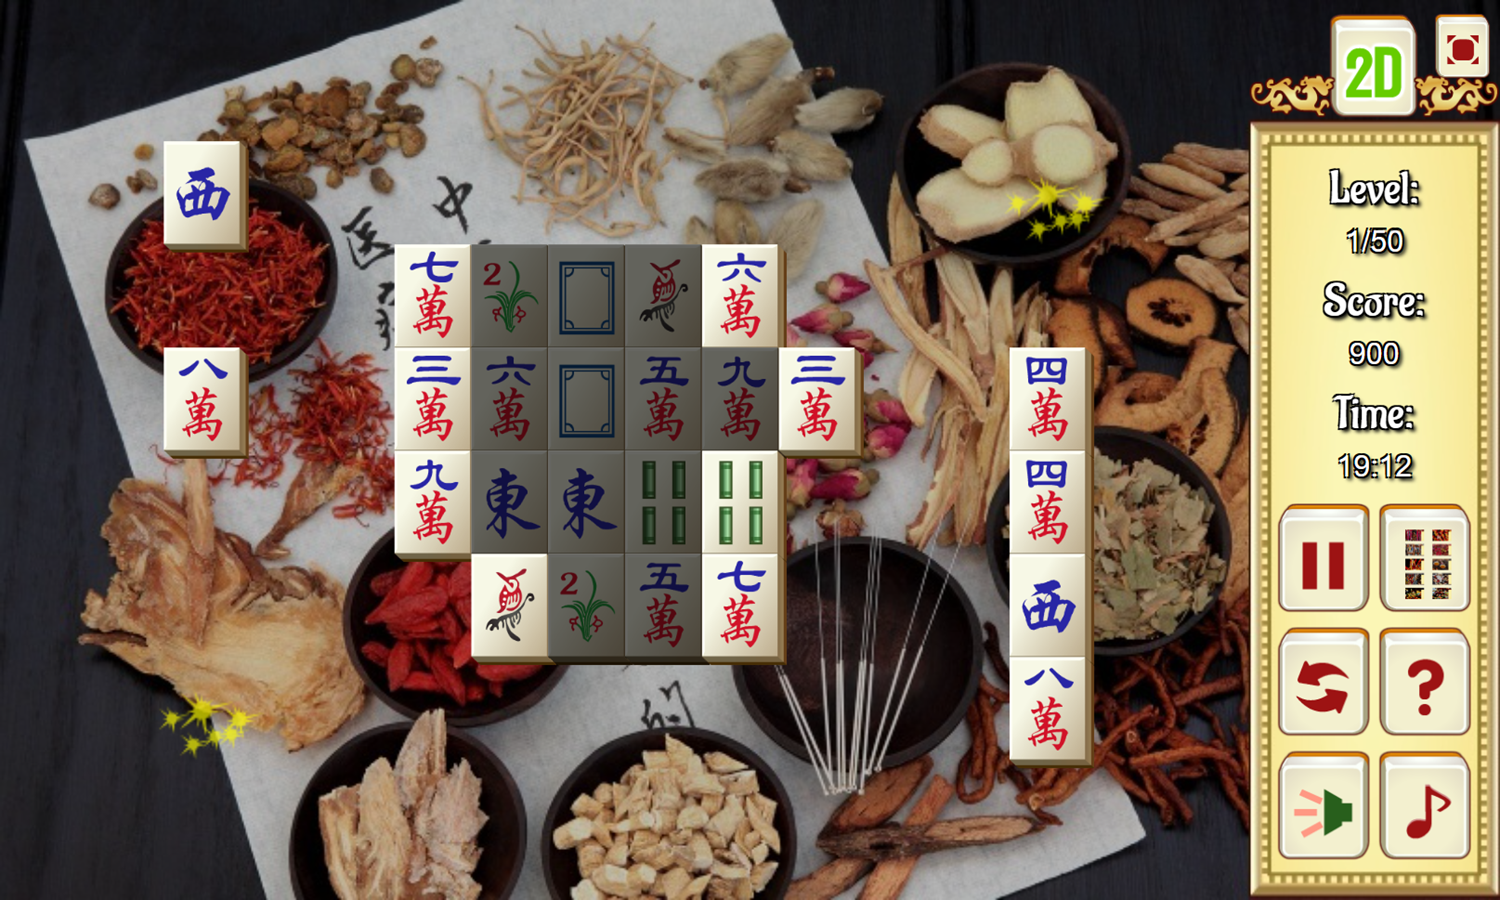 Mahjongg Shanghai Game Play Screenshot.